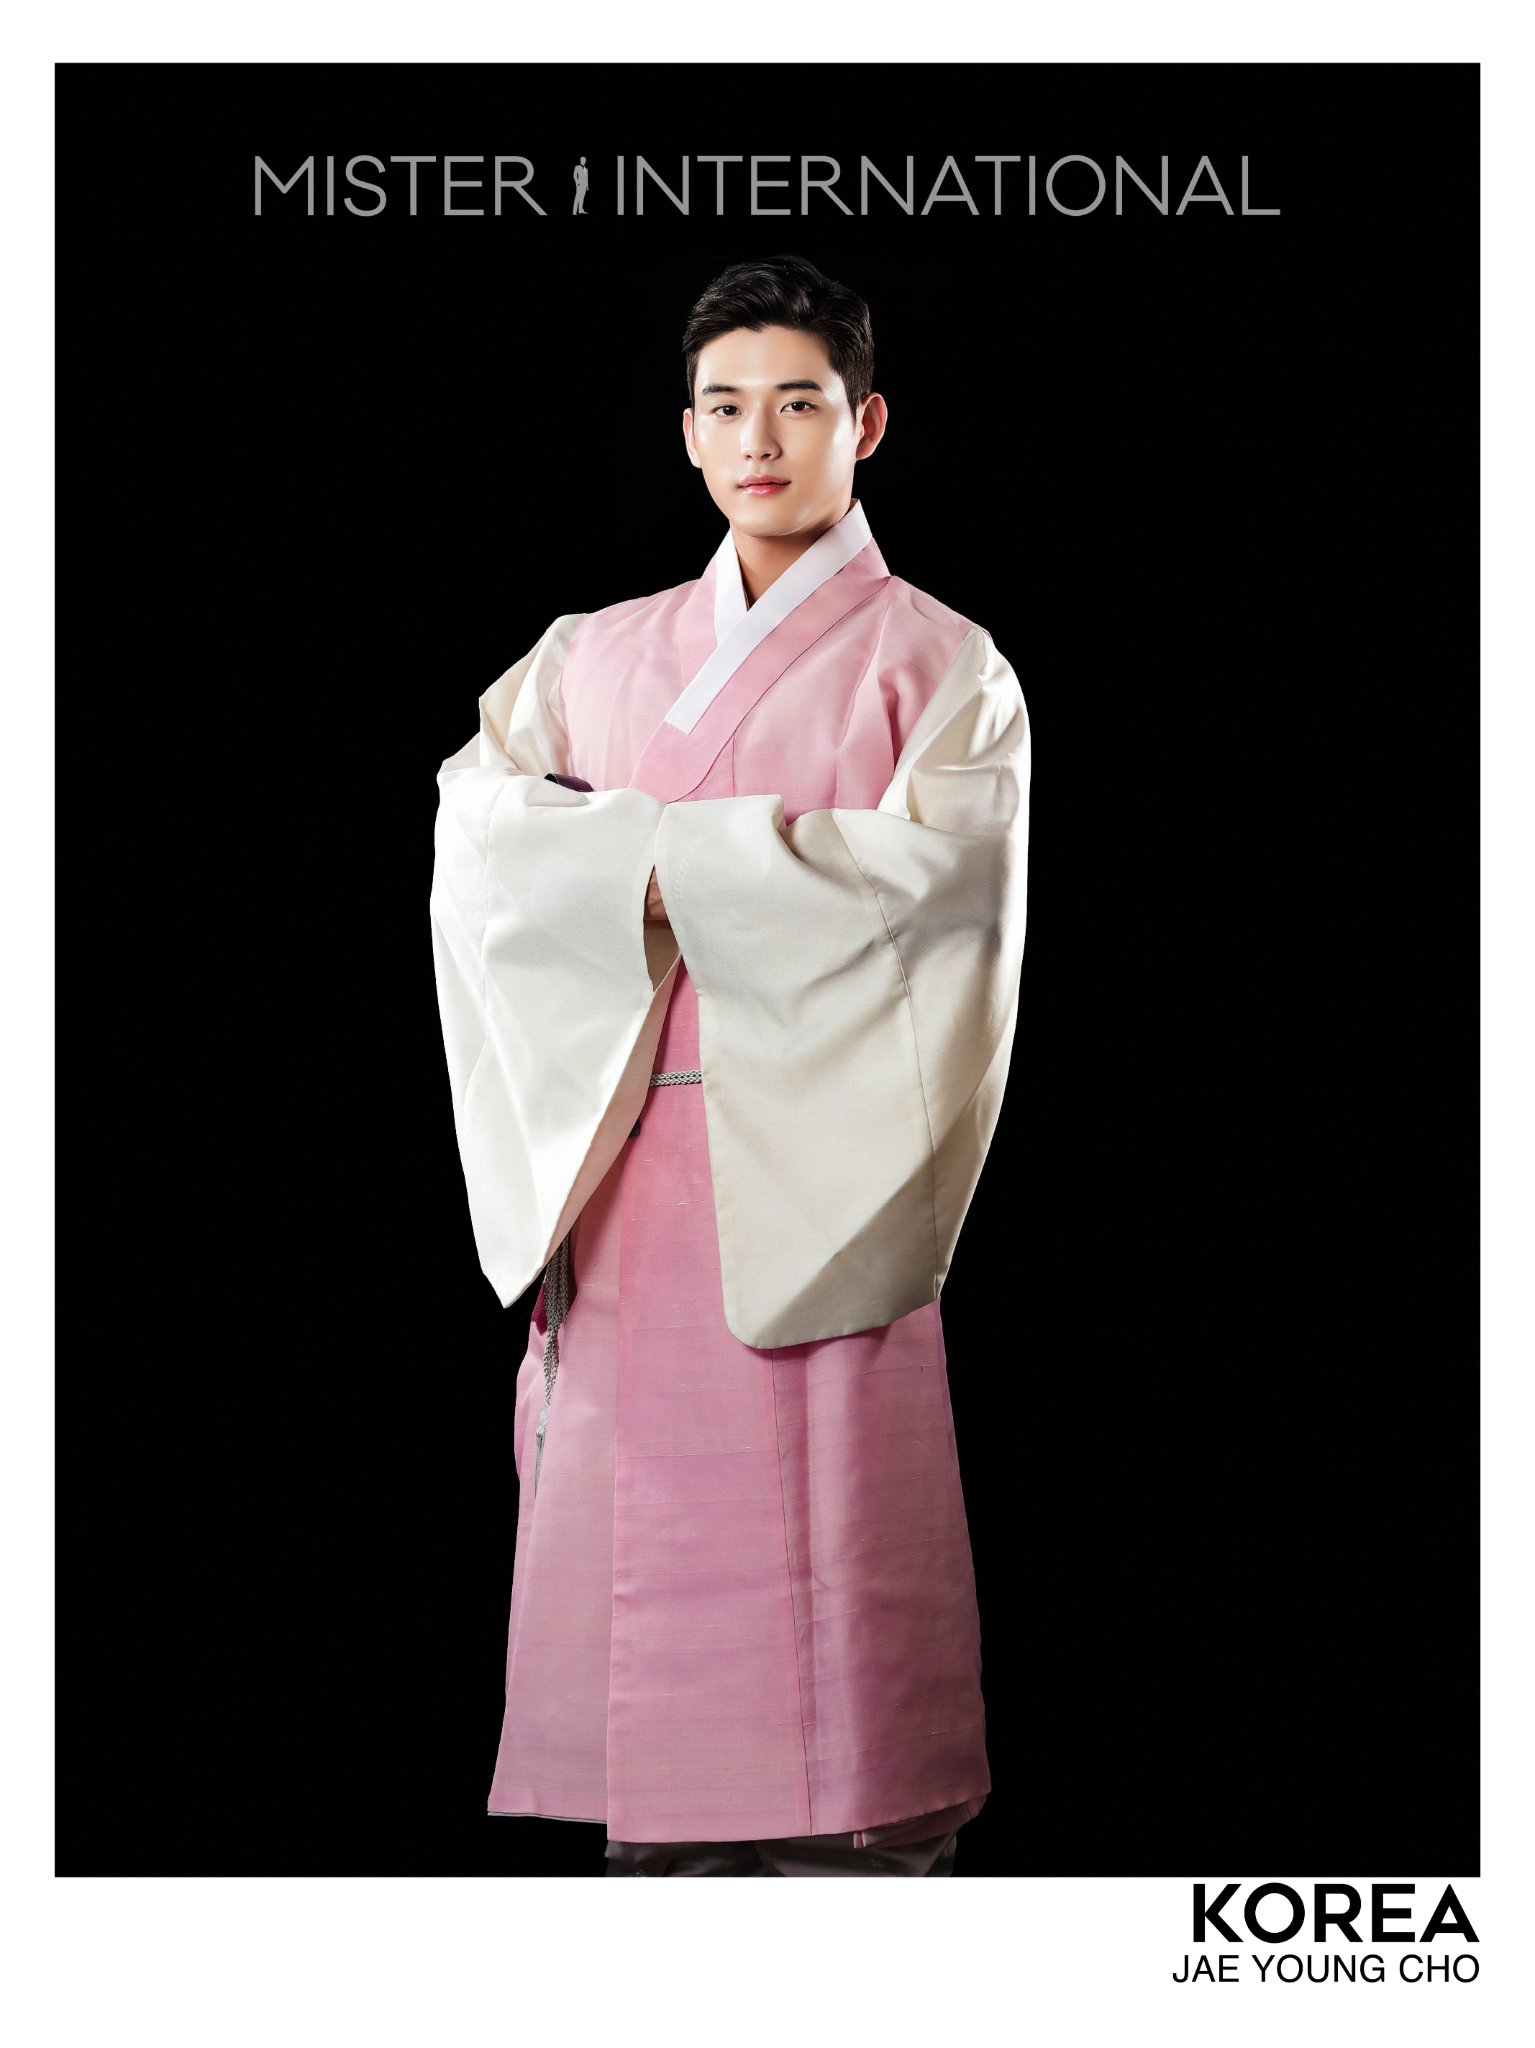 Mister International 2022 KOREA Cho Jae Young National Costume Shot by Raymond Saldana